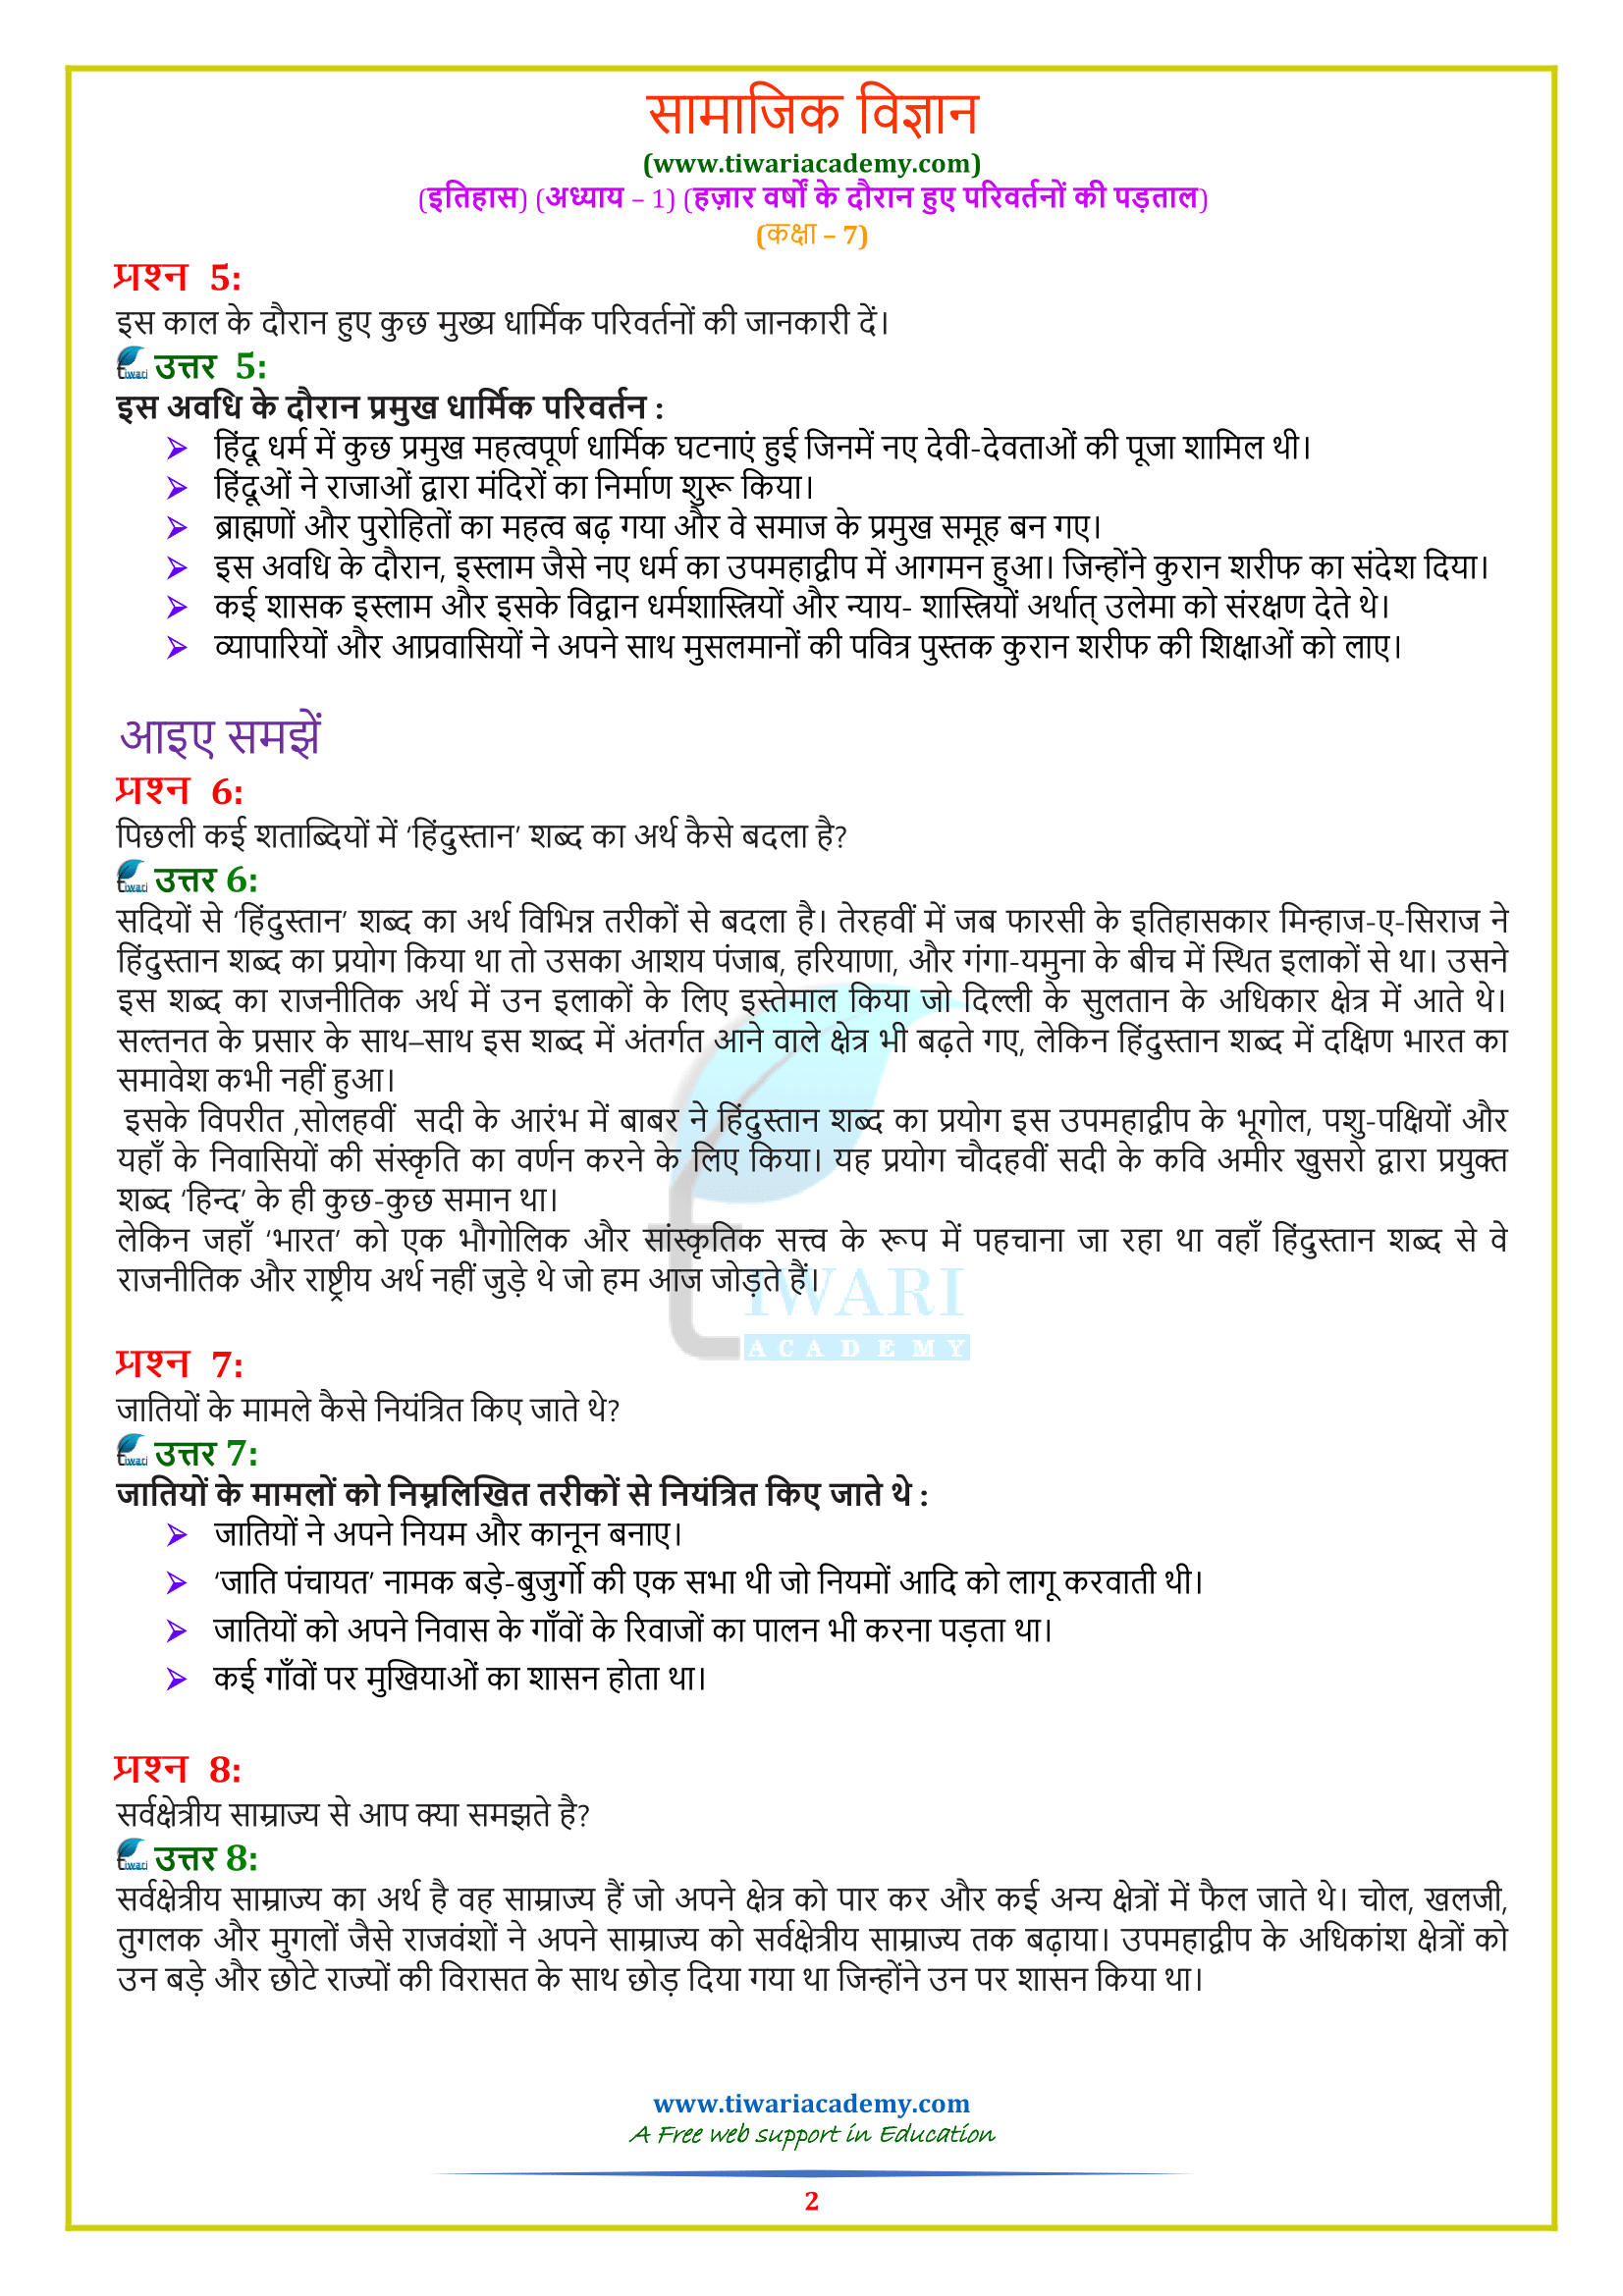 NCERT Solutions for class 7 Social History in Hindi Medium